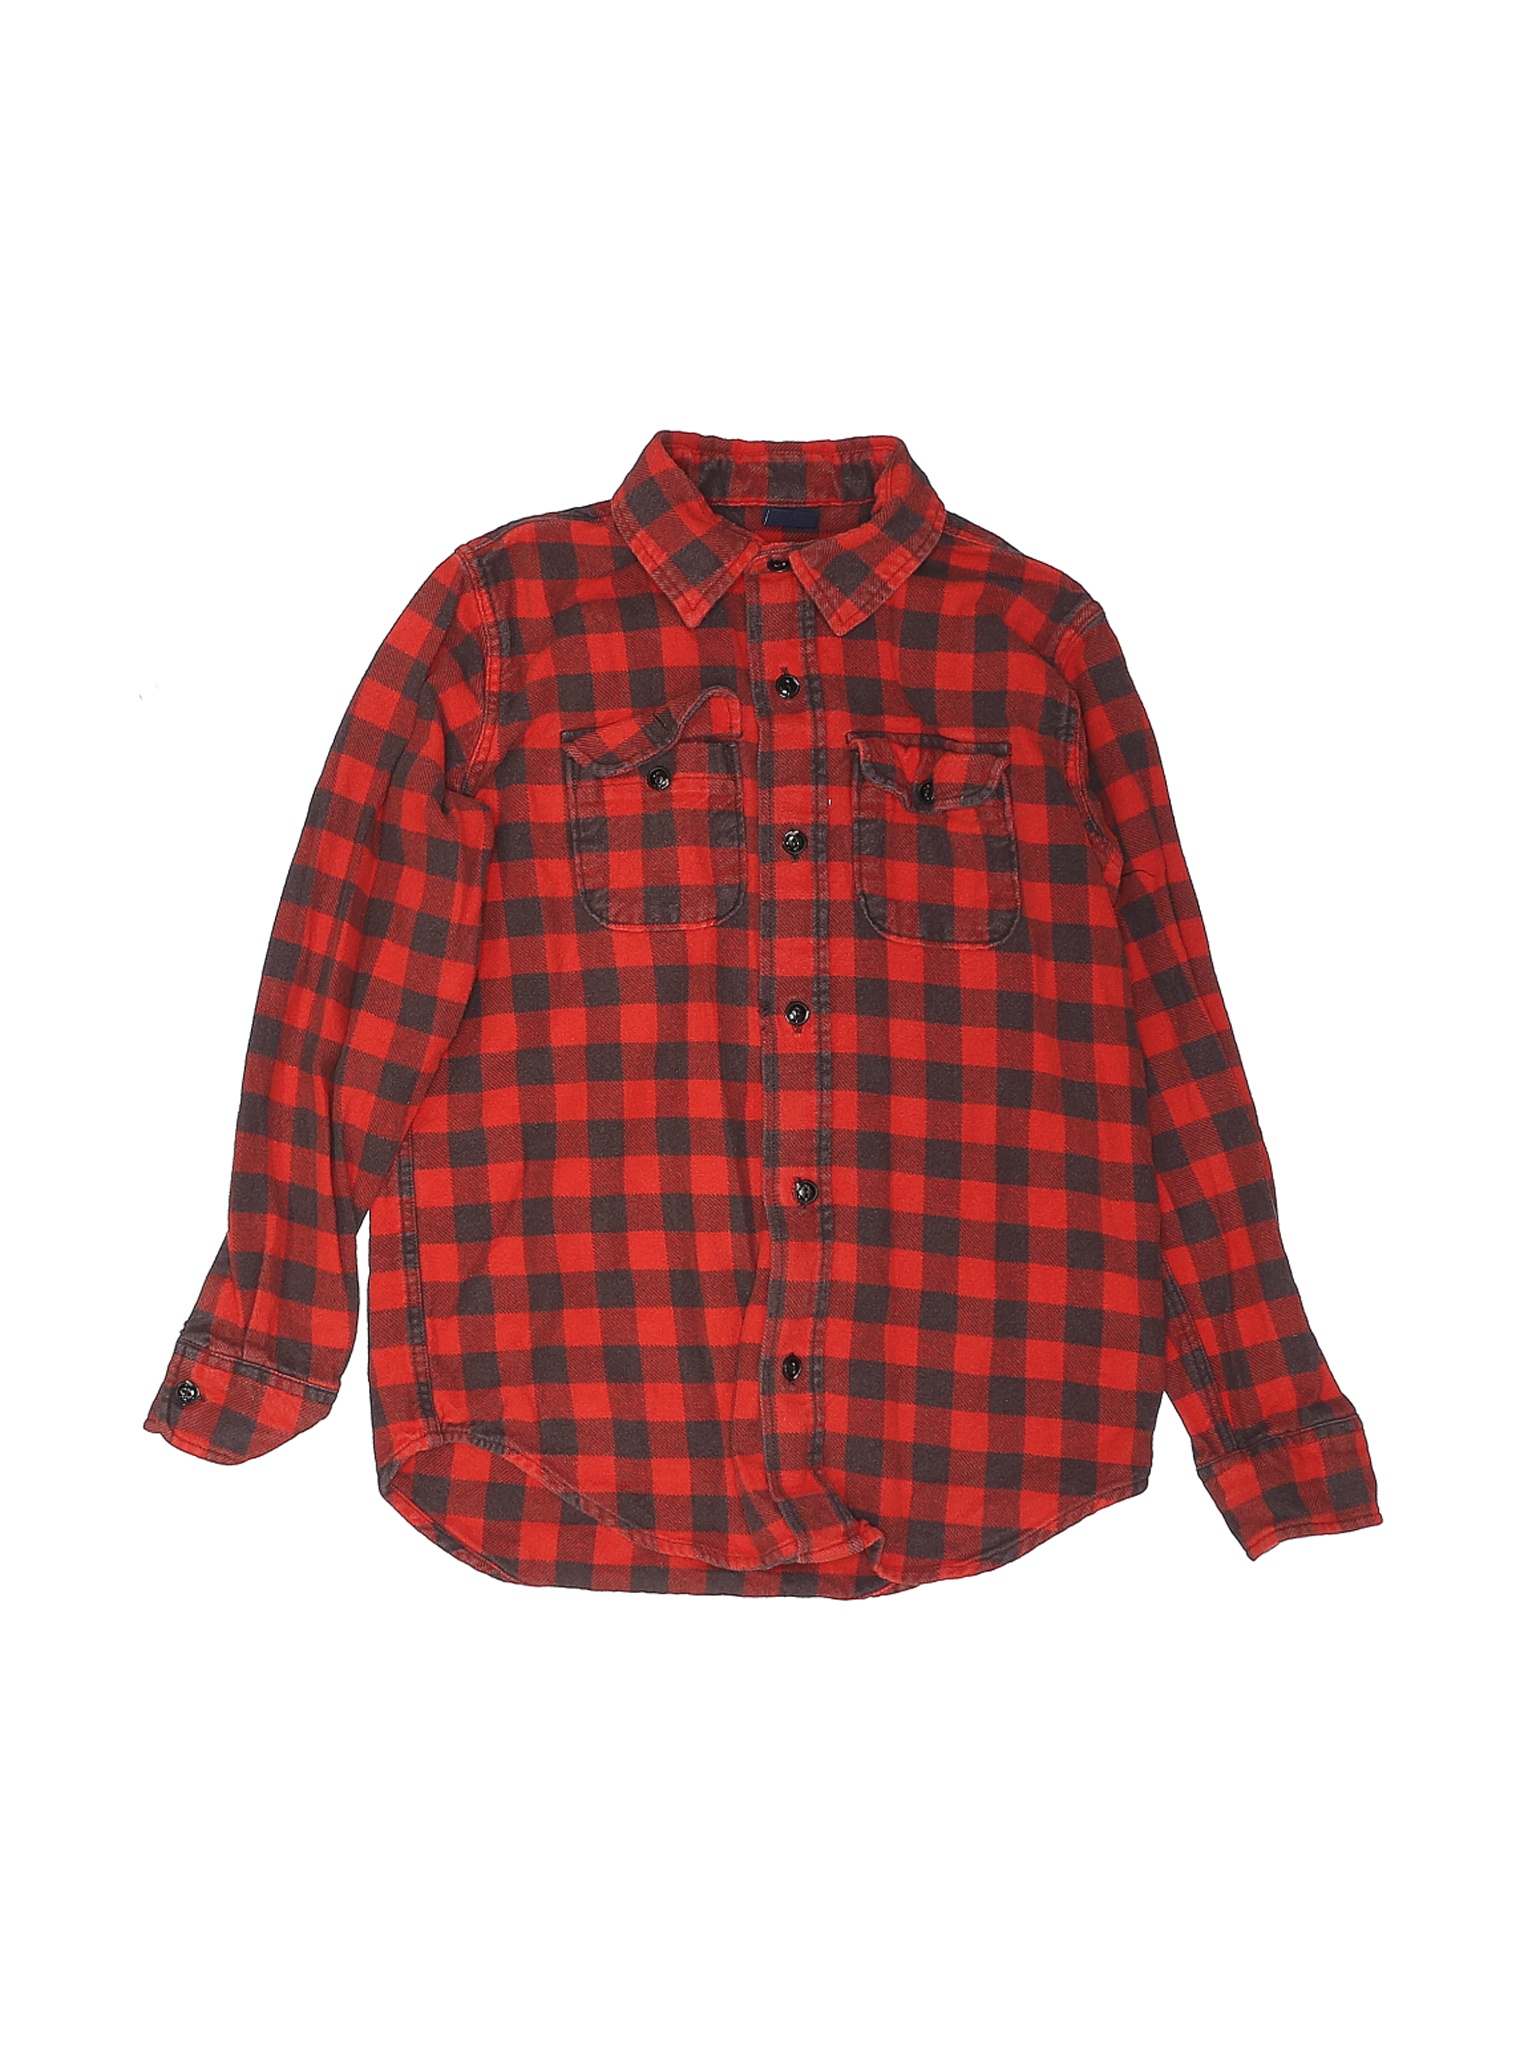 Gap Kids Boys Red Long Sleeve Button-Down Shirt 10 | eBay